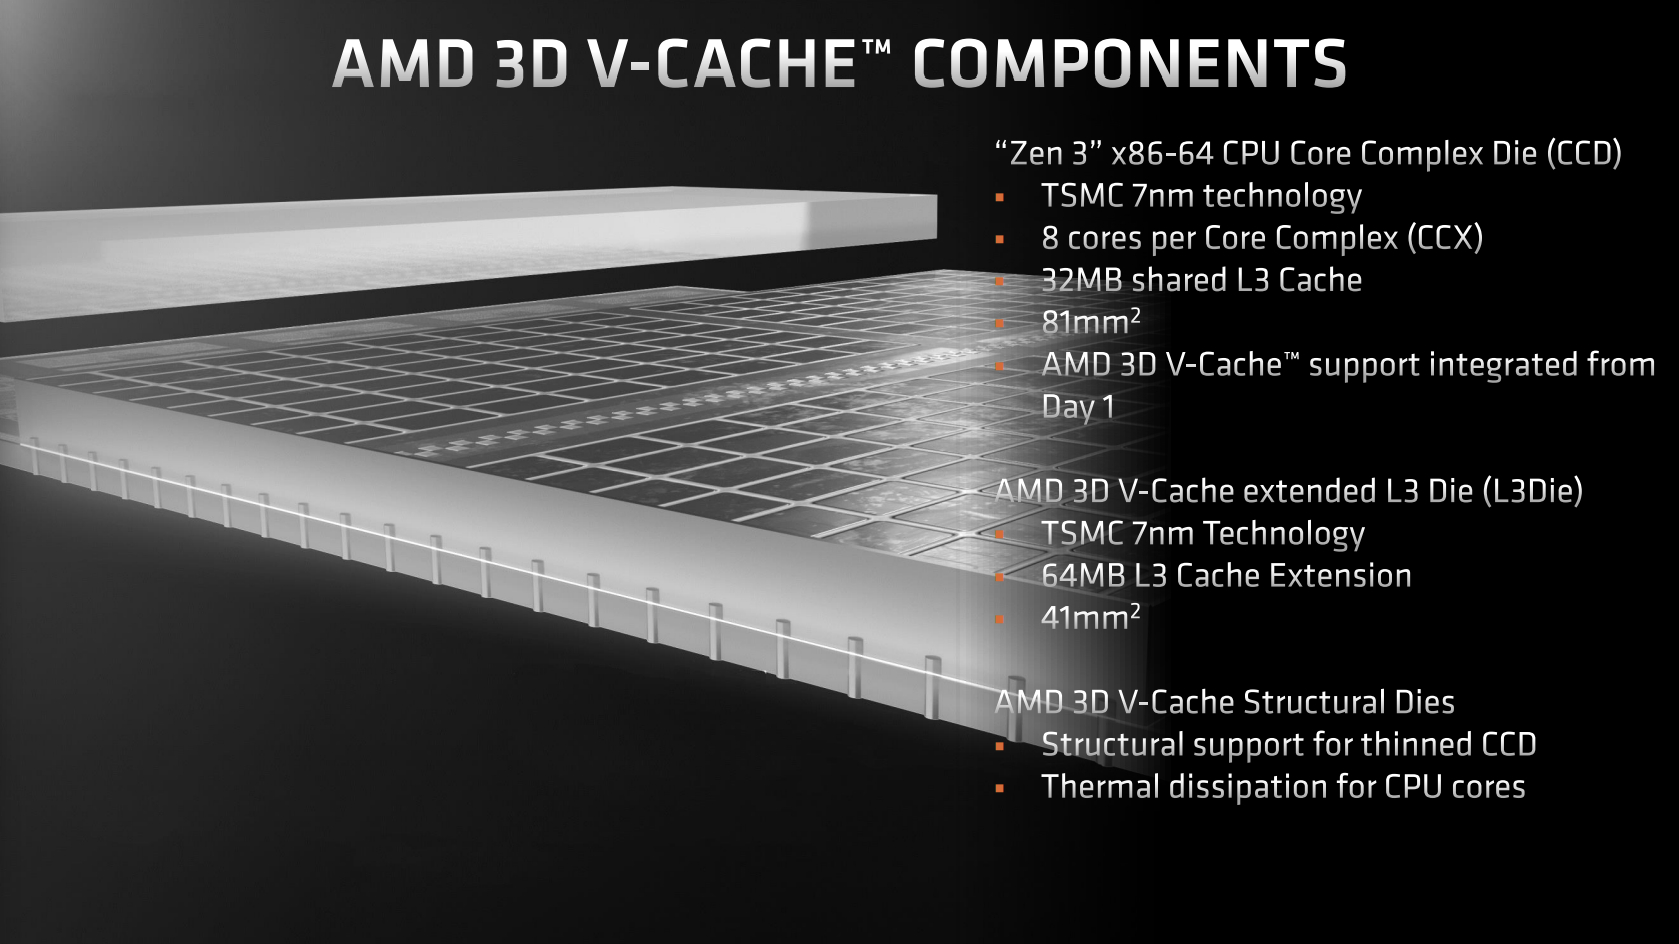 AMD 3D V-Cache design